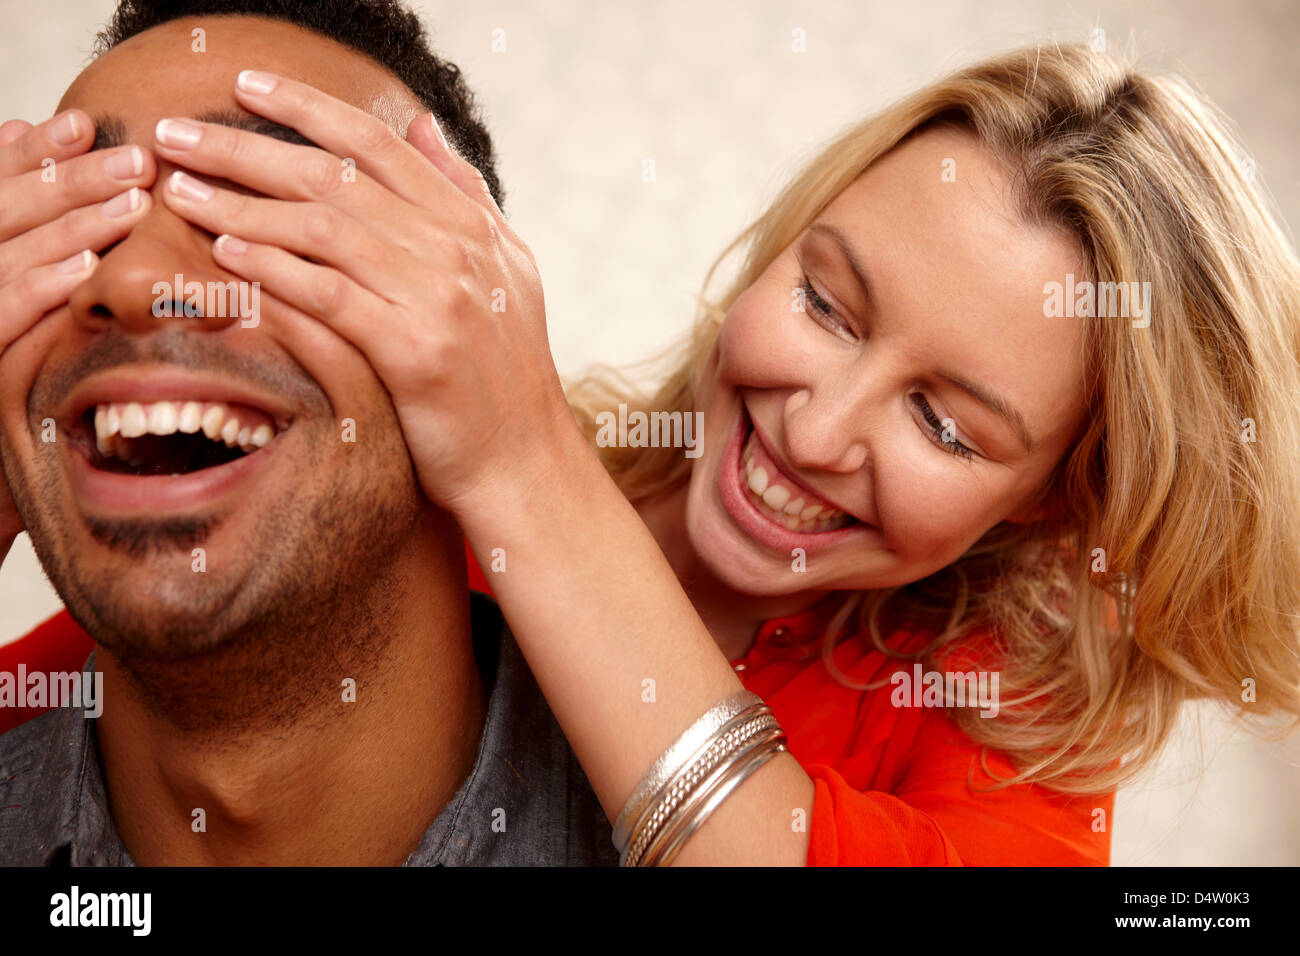 Woman covering boyfriend's eyes Stock Photo